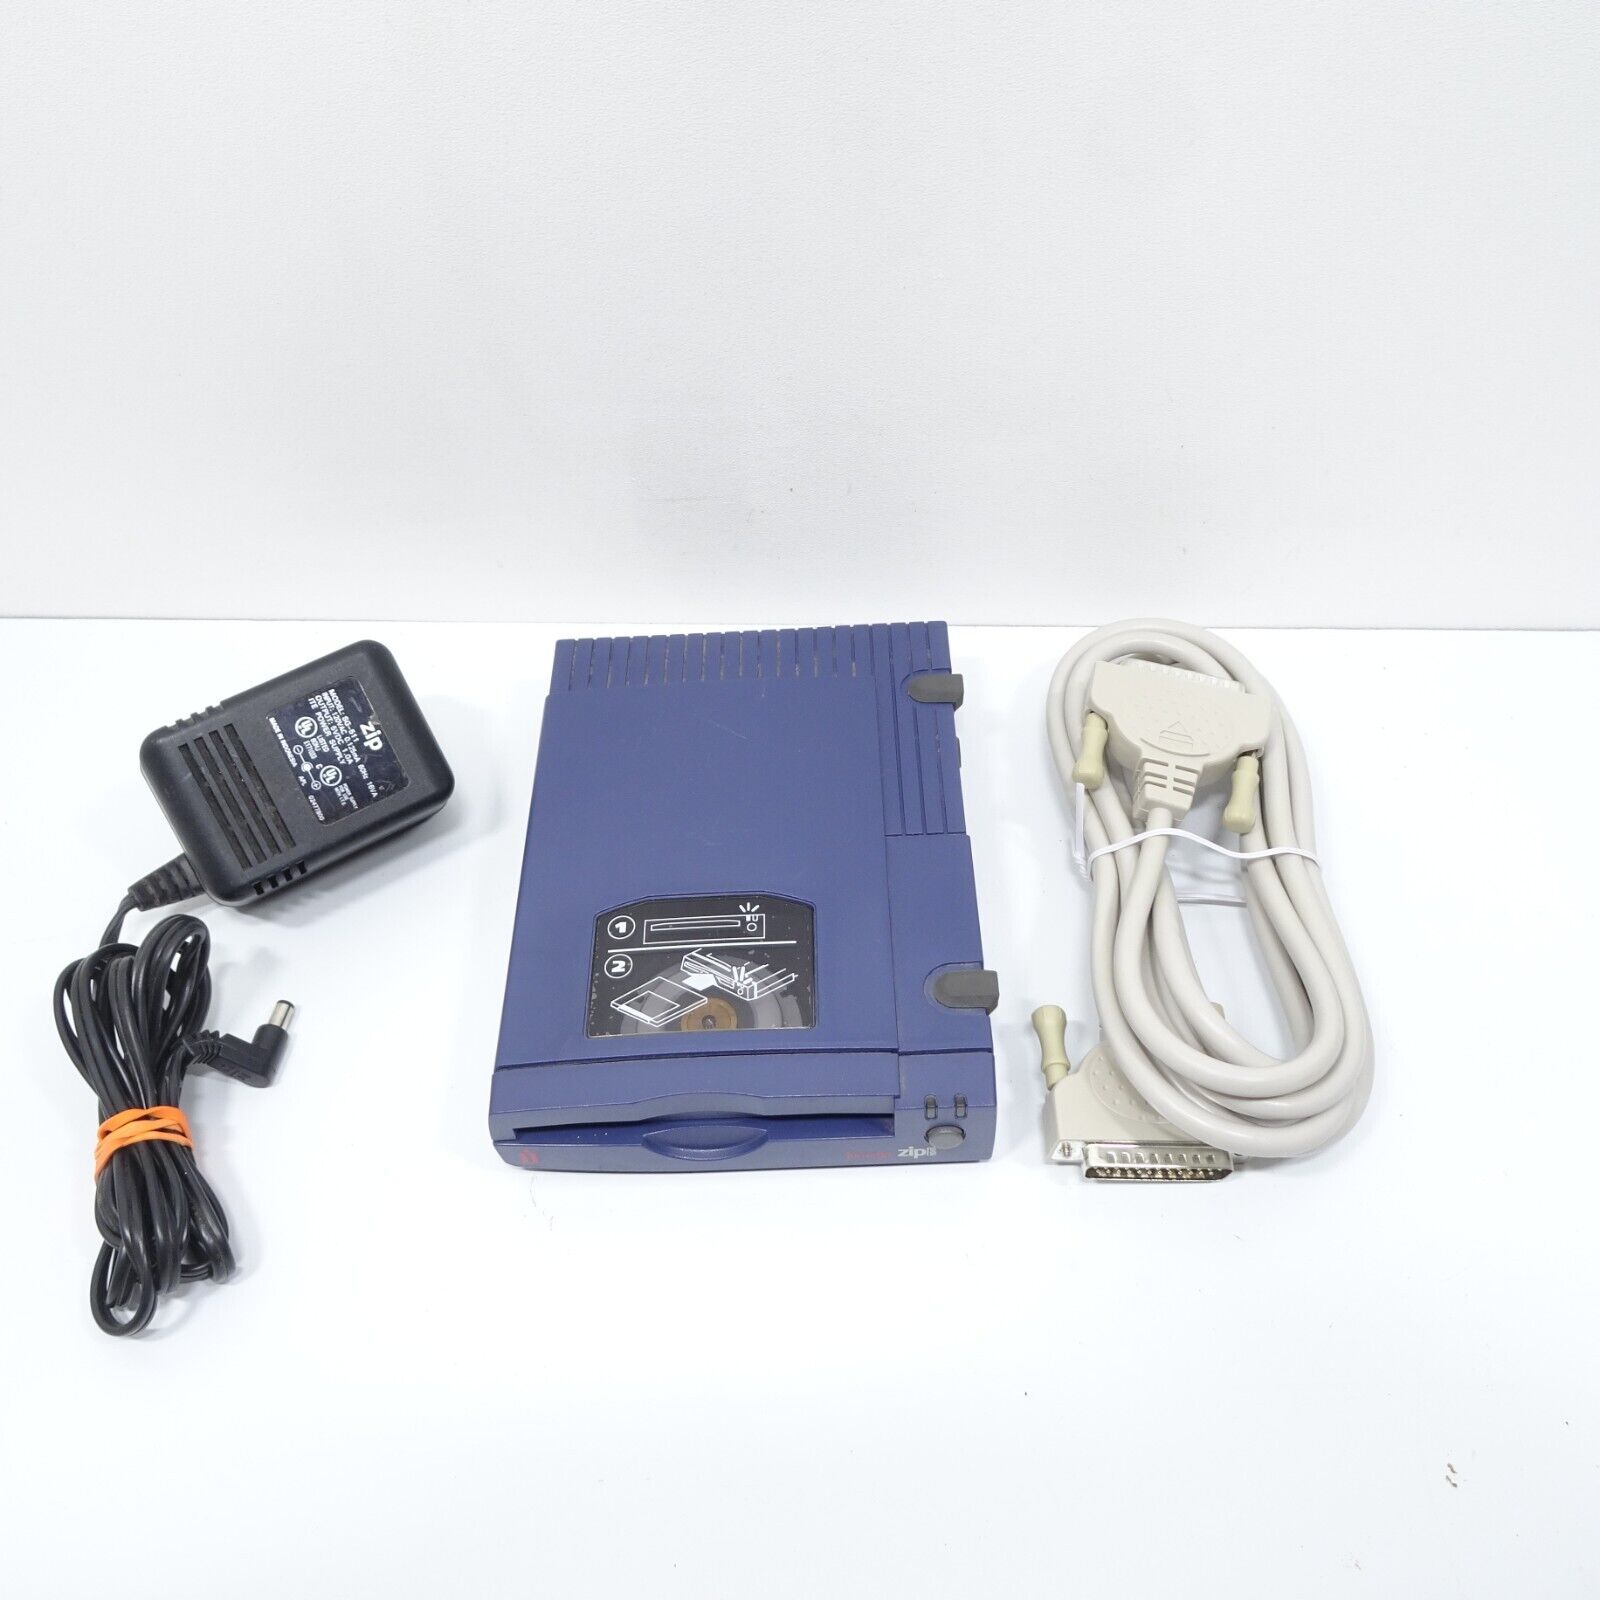 Vtg IOMEGA Zip 100 External Drive for PC Z100P2 w/ Power Adapter